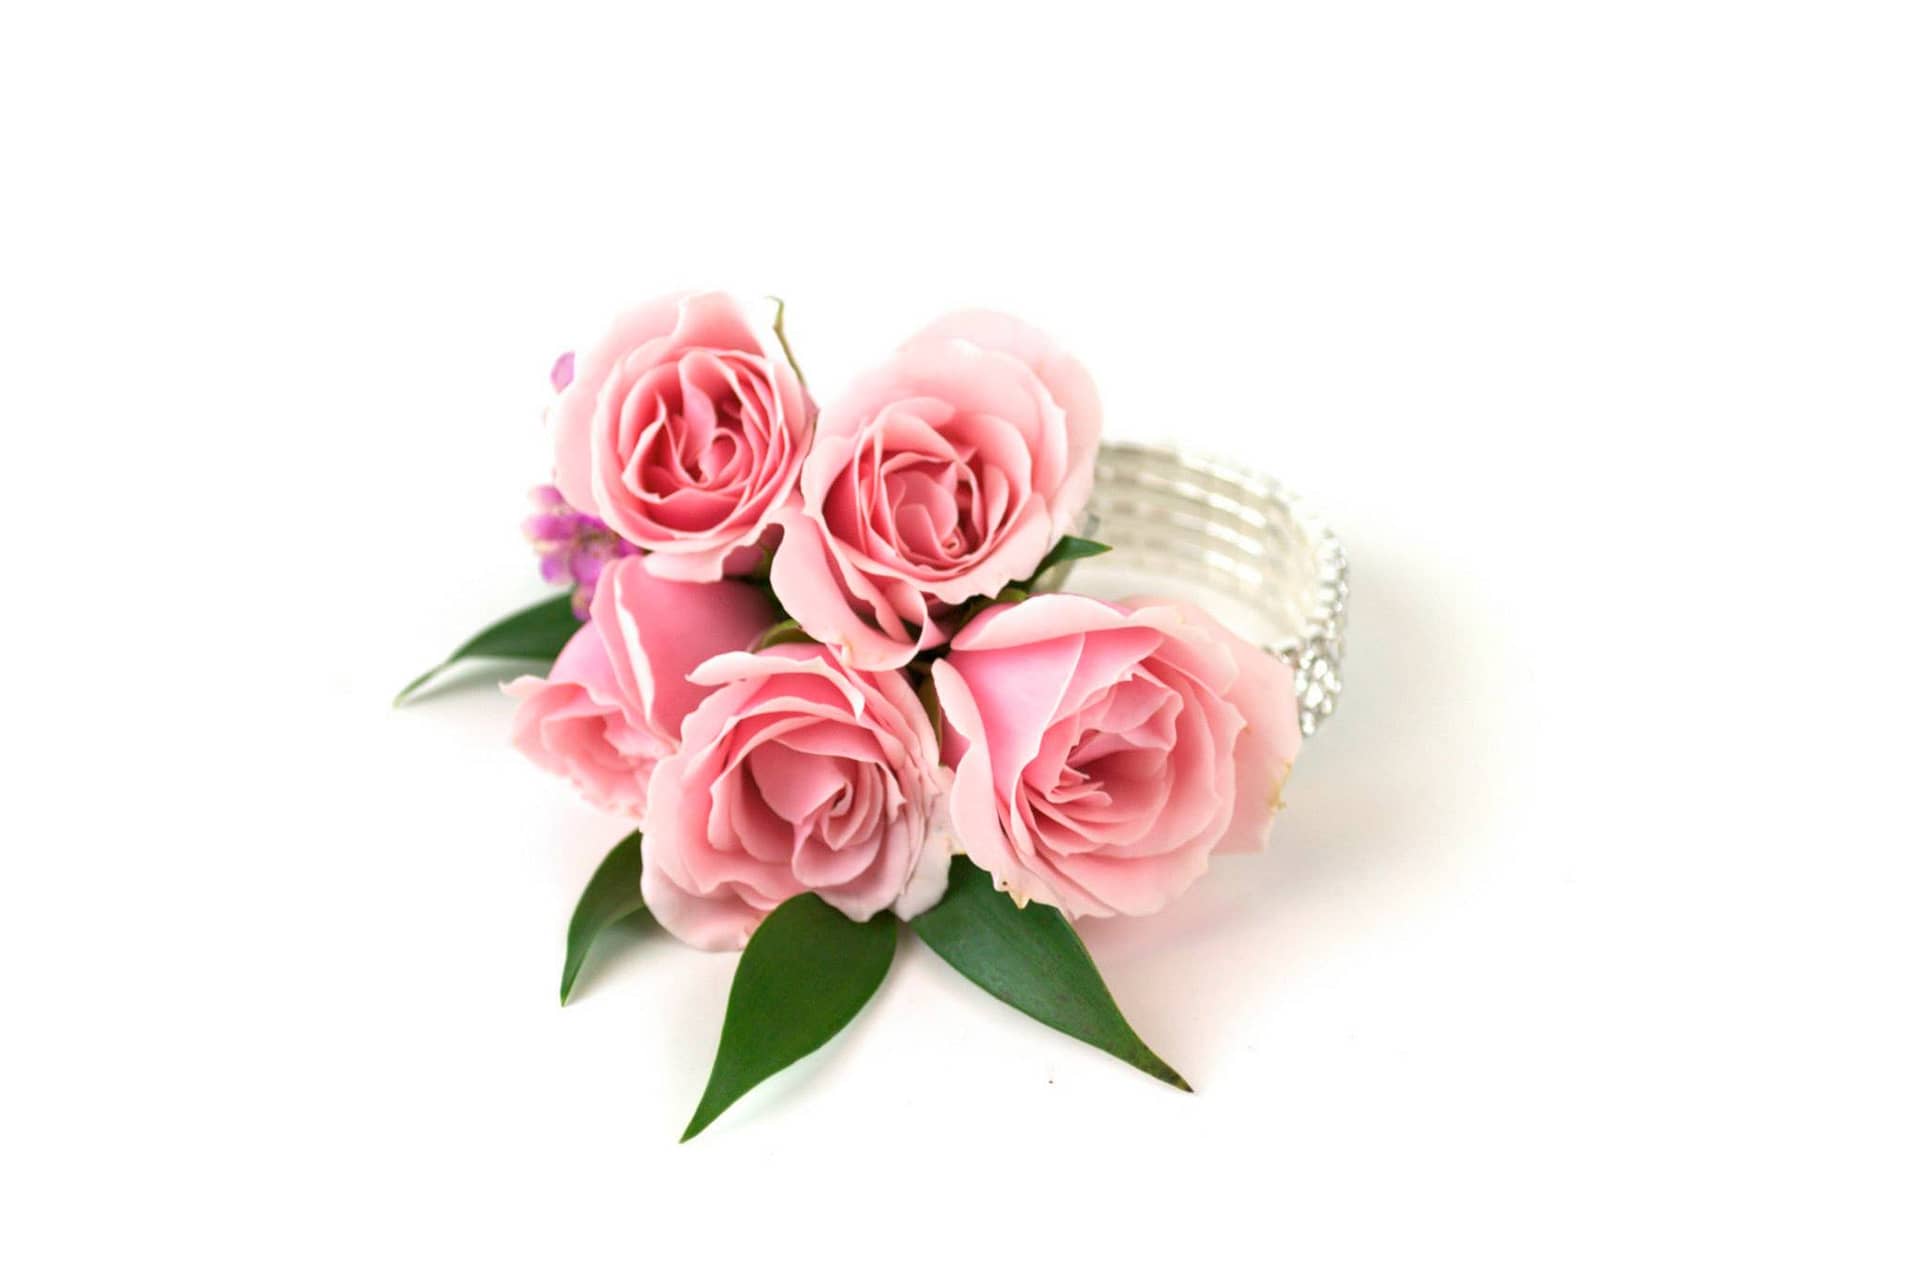 minneapolis-florist-wedding-pink-rose